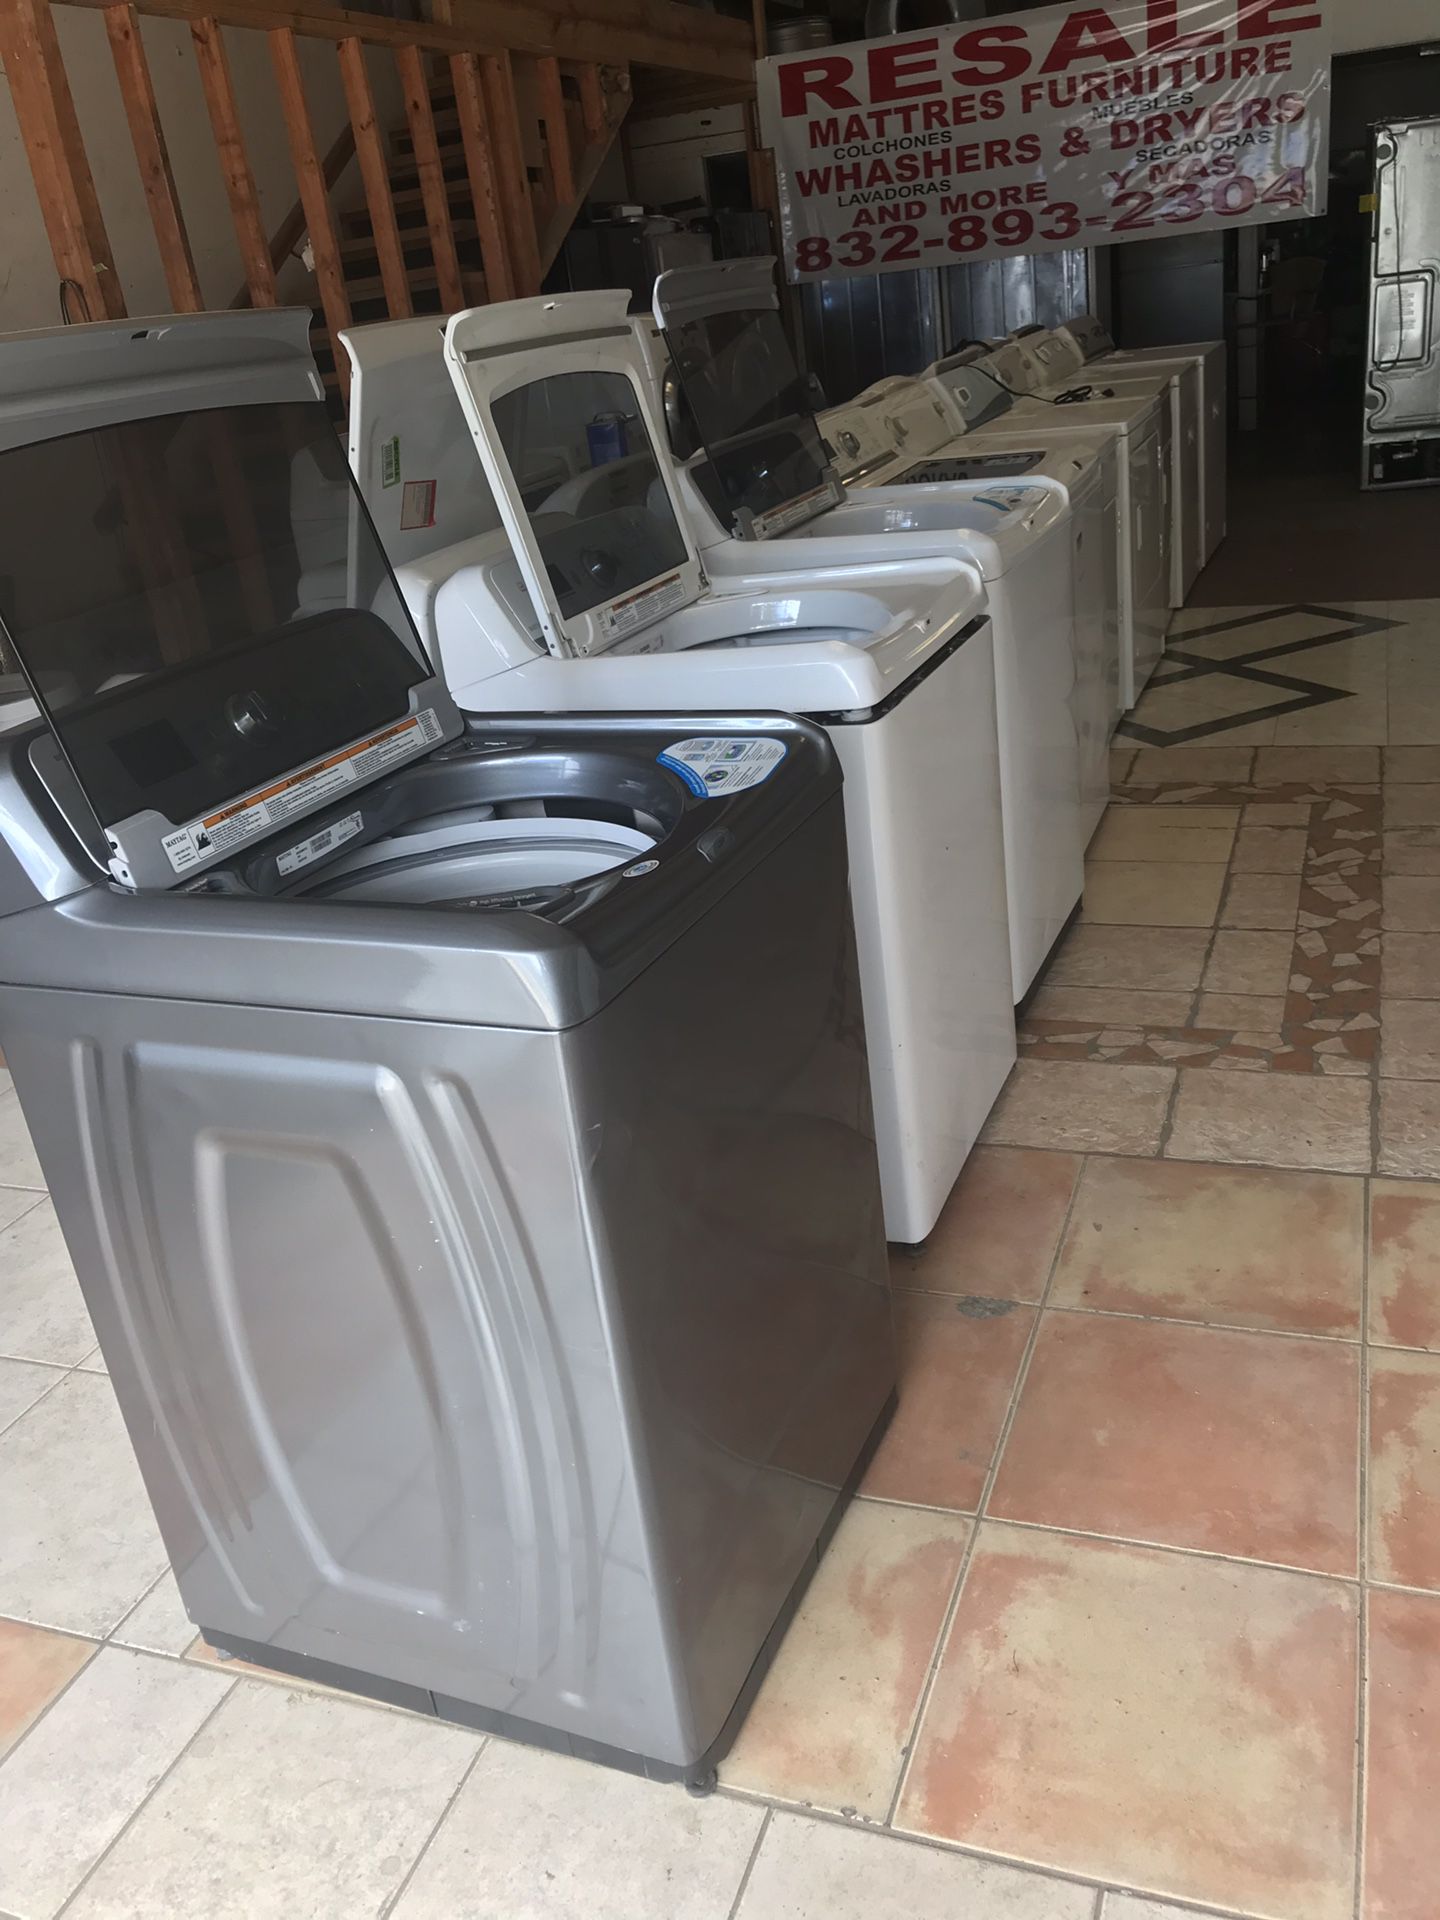 I sell washing machines Maytag bravos mct .. maytag bravo XL ..Whirlpool cabrio ..kenmore .. GE. samsung price to deal I make repair of washers drye